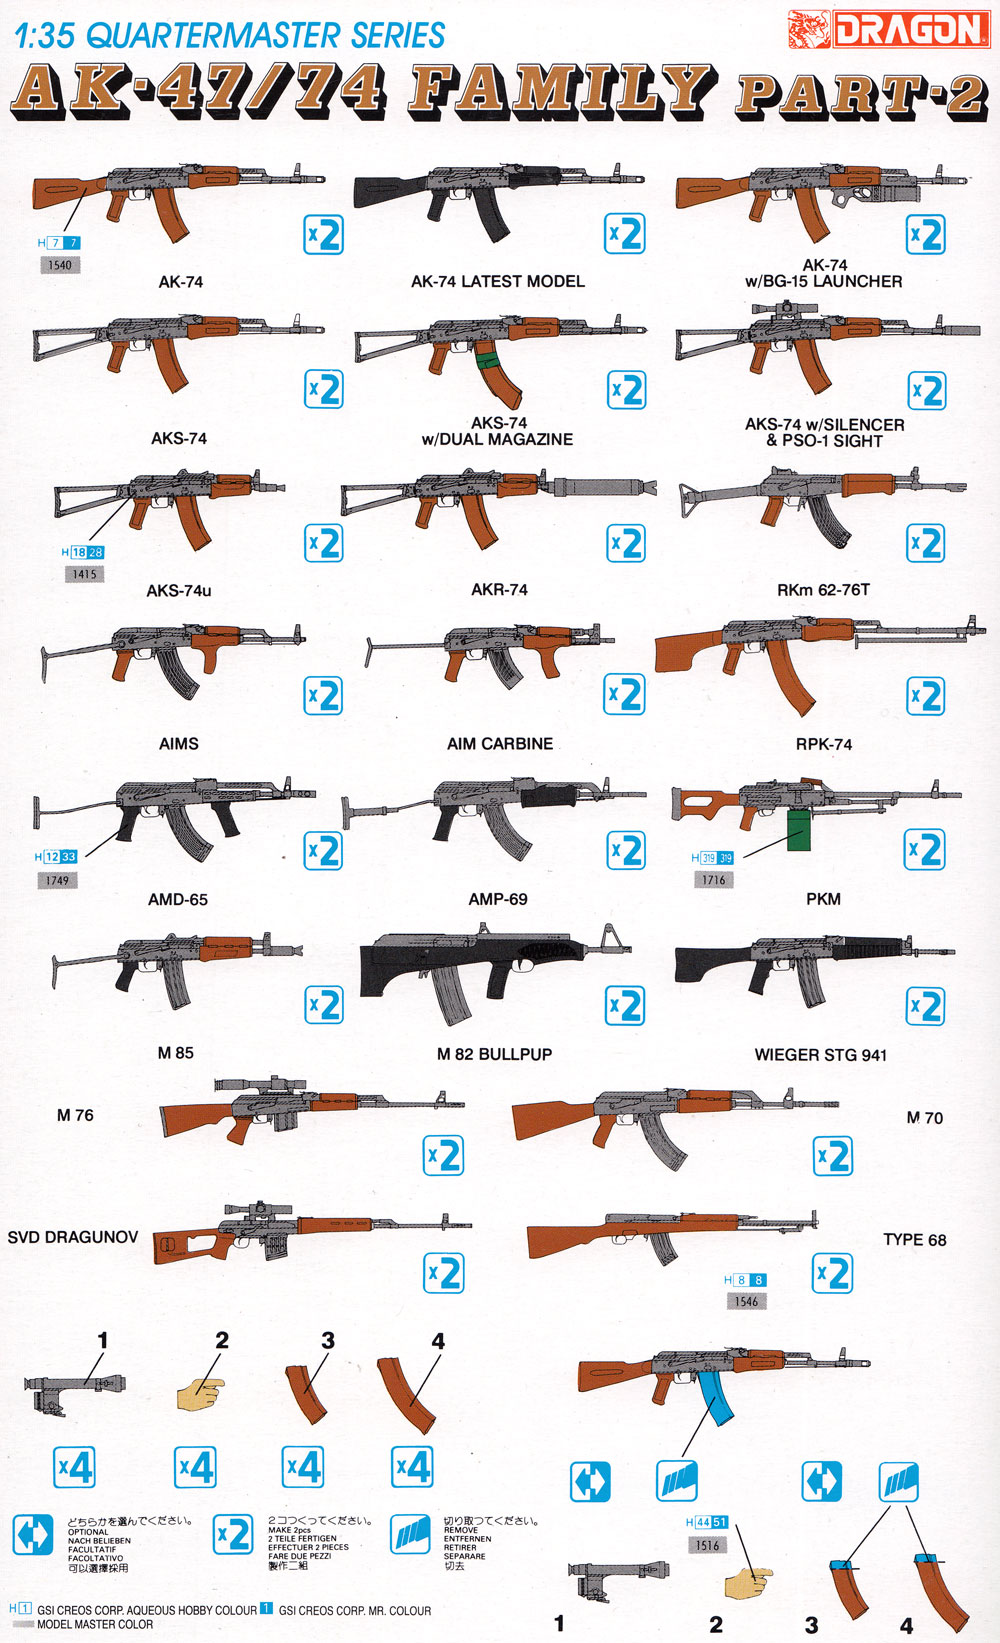 AK-47/74 ライフルファミリー Part-2 プラモデル (ドラゴン 1/35 Quartermaster Series No.3805) 商品画像_2